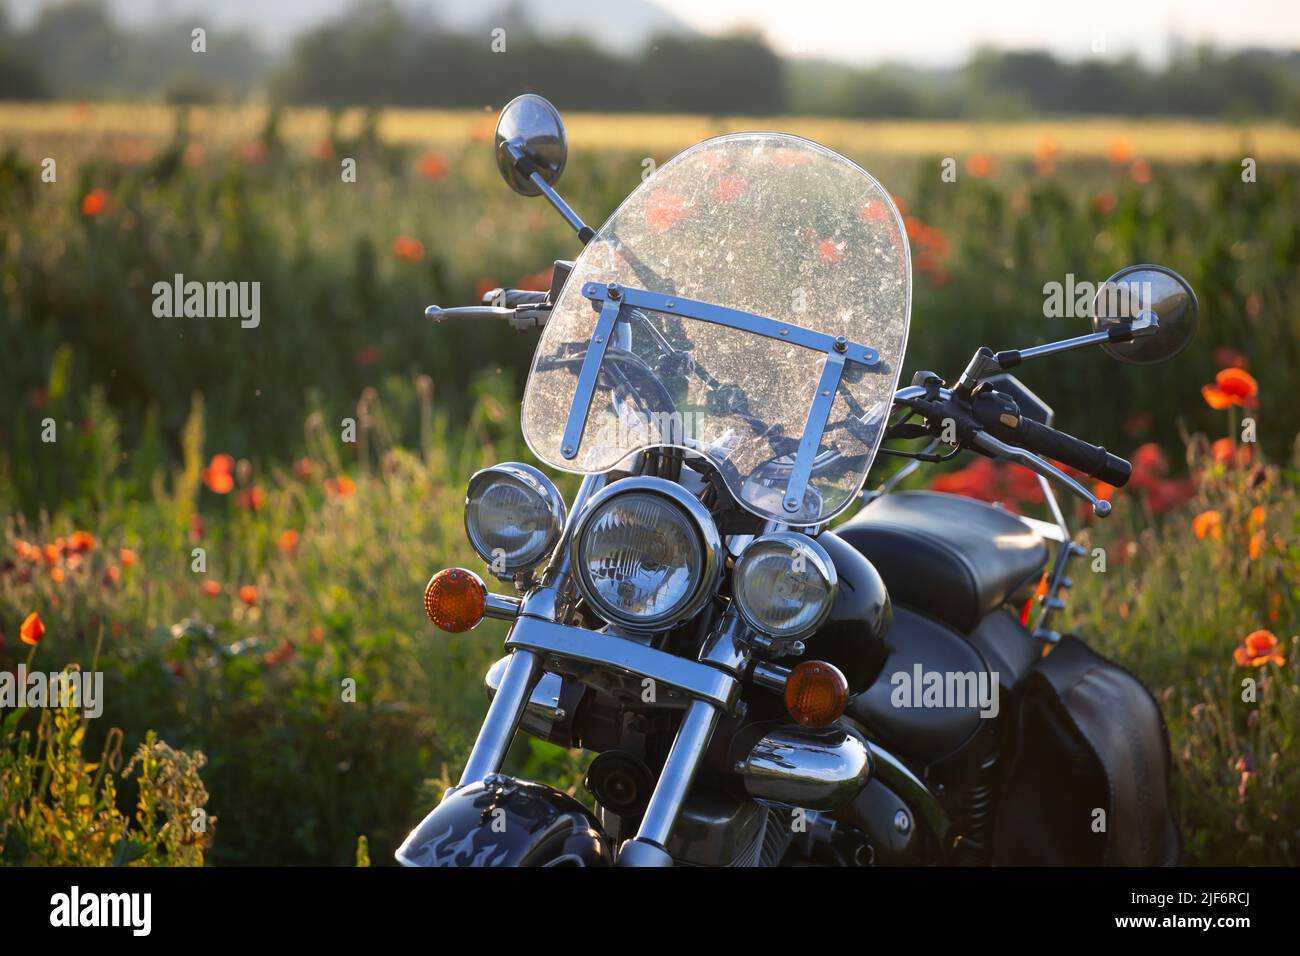 Poppy races with wanderlust on new single 'Motorbike